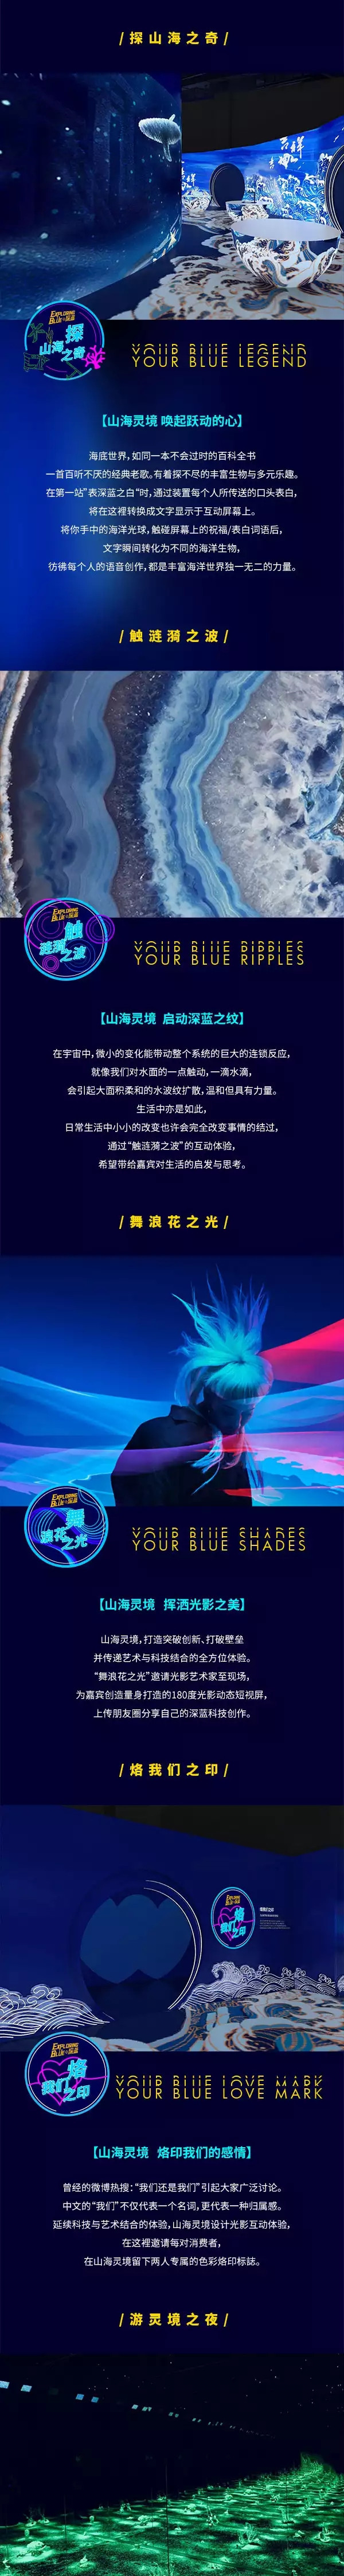 2020《Exploring Blue·深蓝》展-重庆站